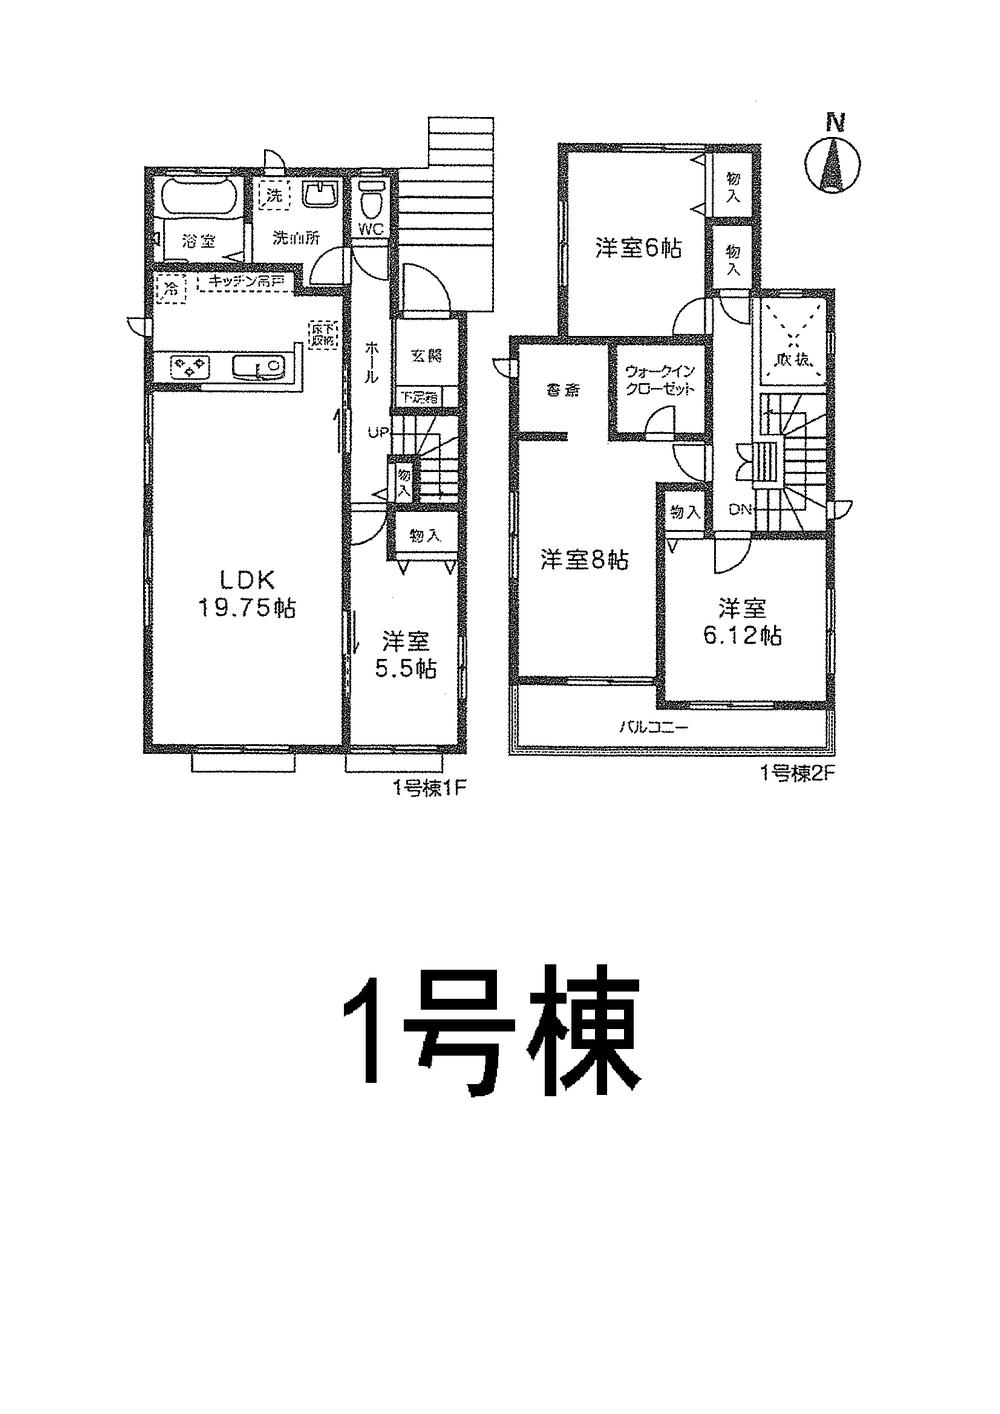 Floor plan. (1 Building), Price 24,300,000 yen, 4LDK, Land area 142.8 sq m , Building area 111.99 sq m